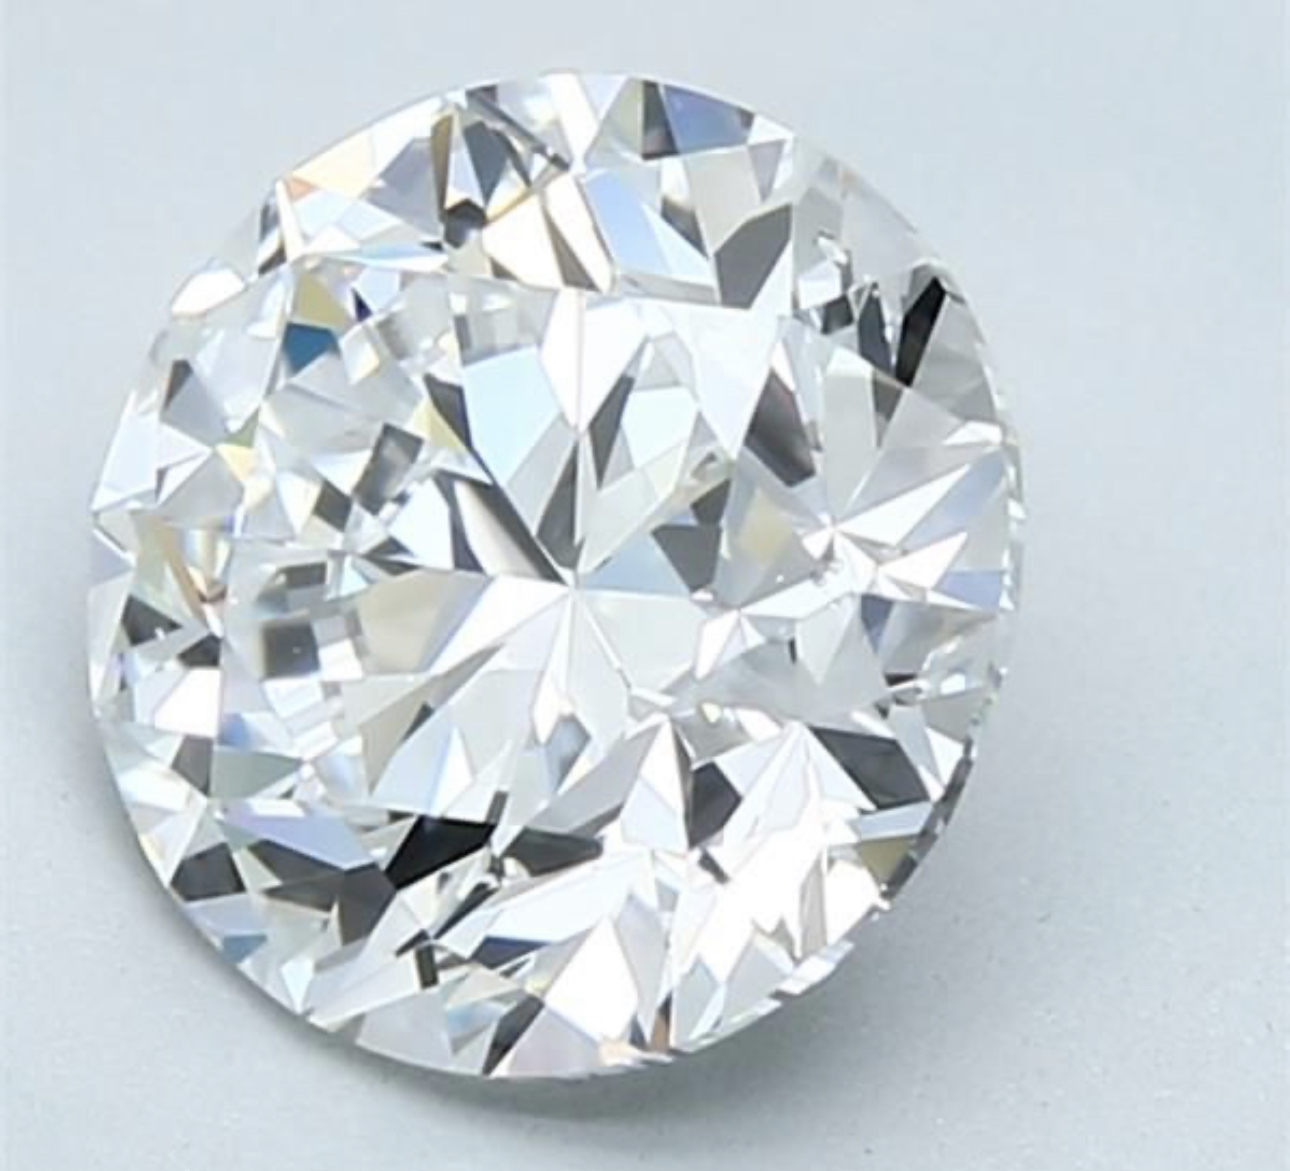 Round Brilliant Cut Natural Diamond 2.06 Carat Colour D Clarity VS1 - DGI 142592299 - Image 6 of 8